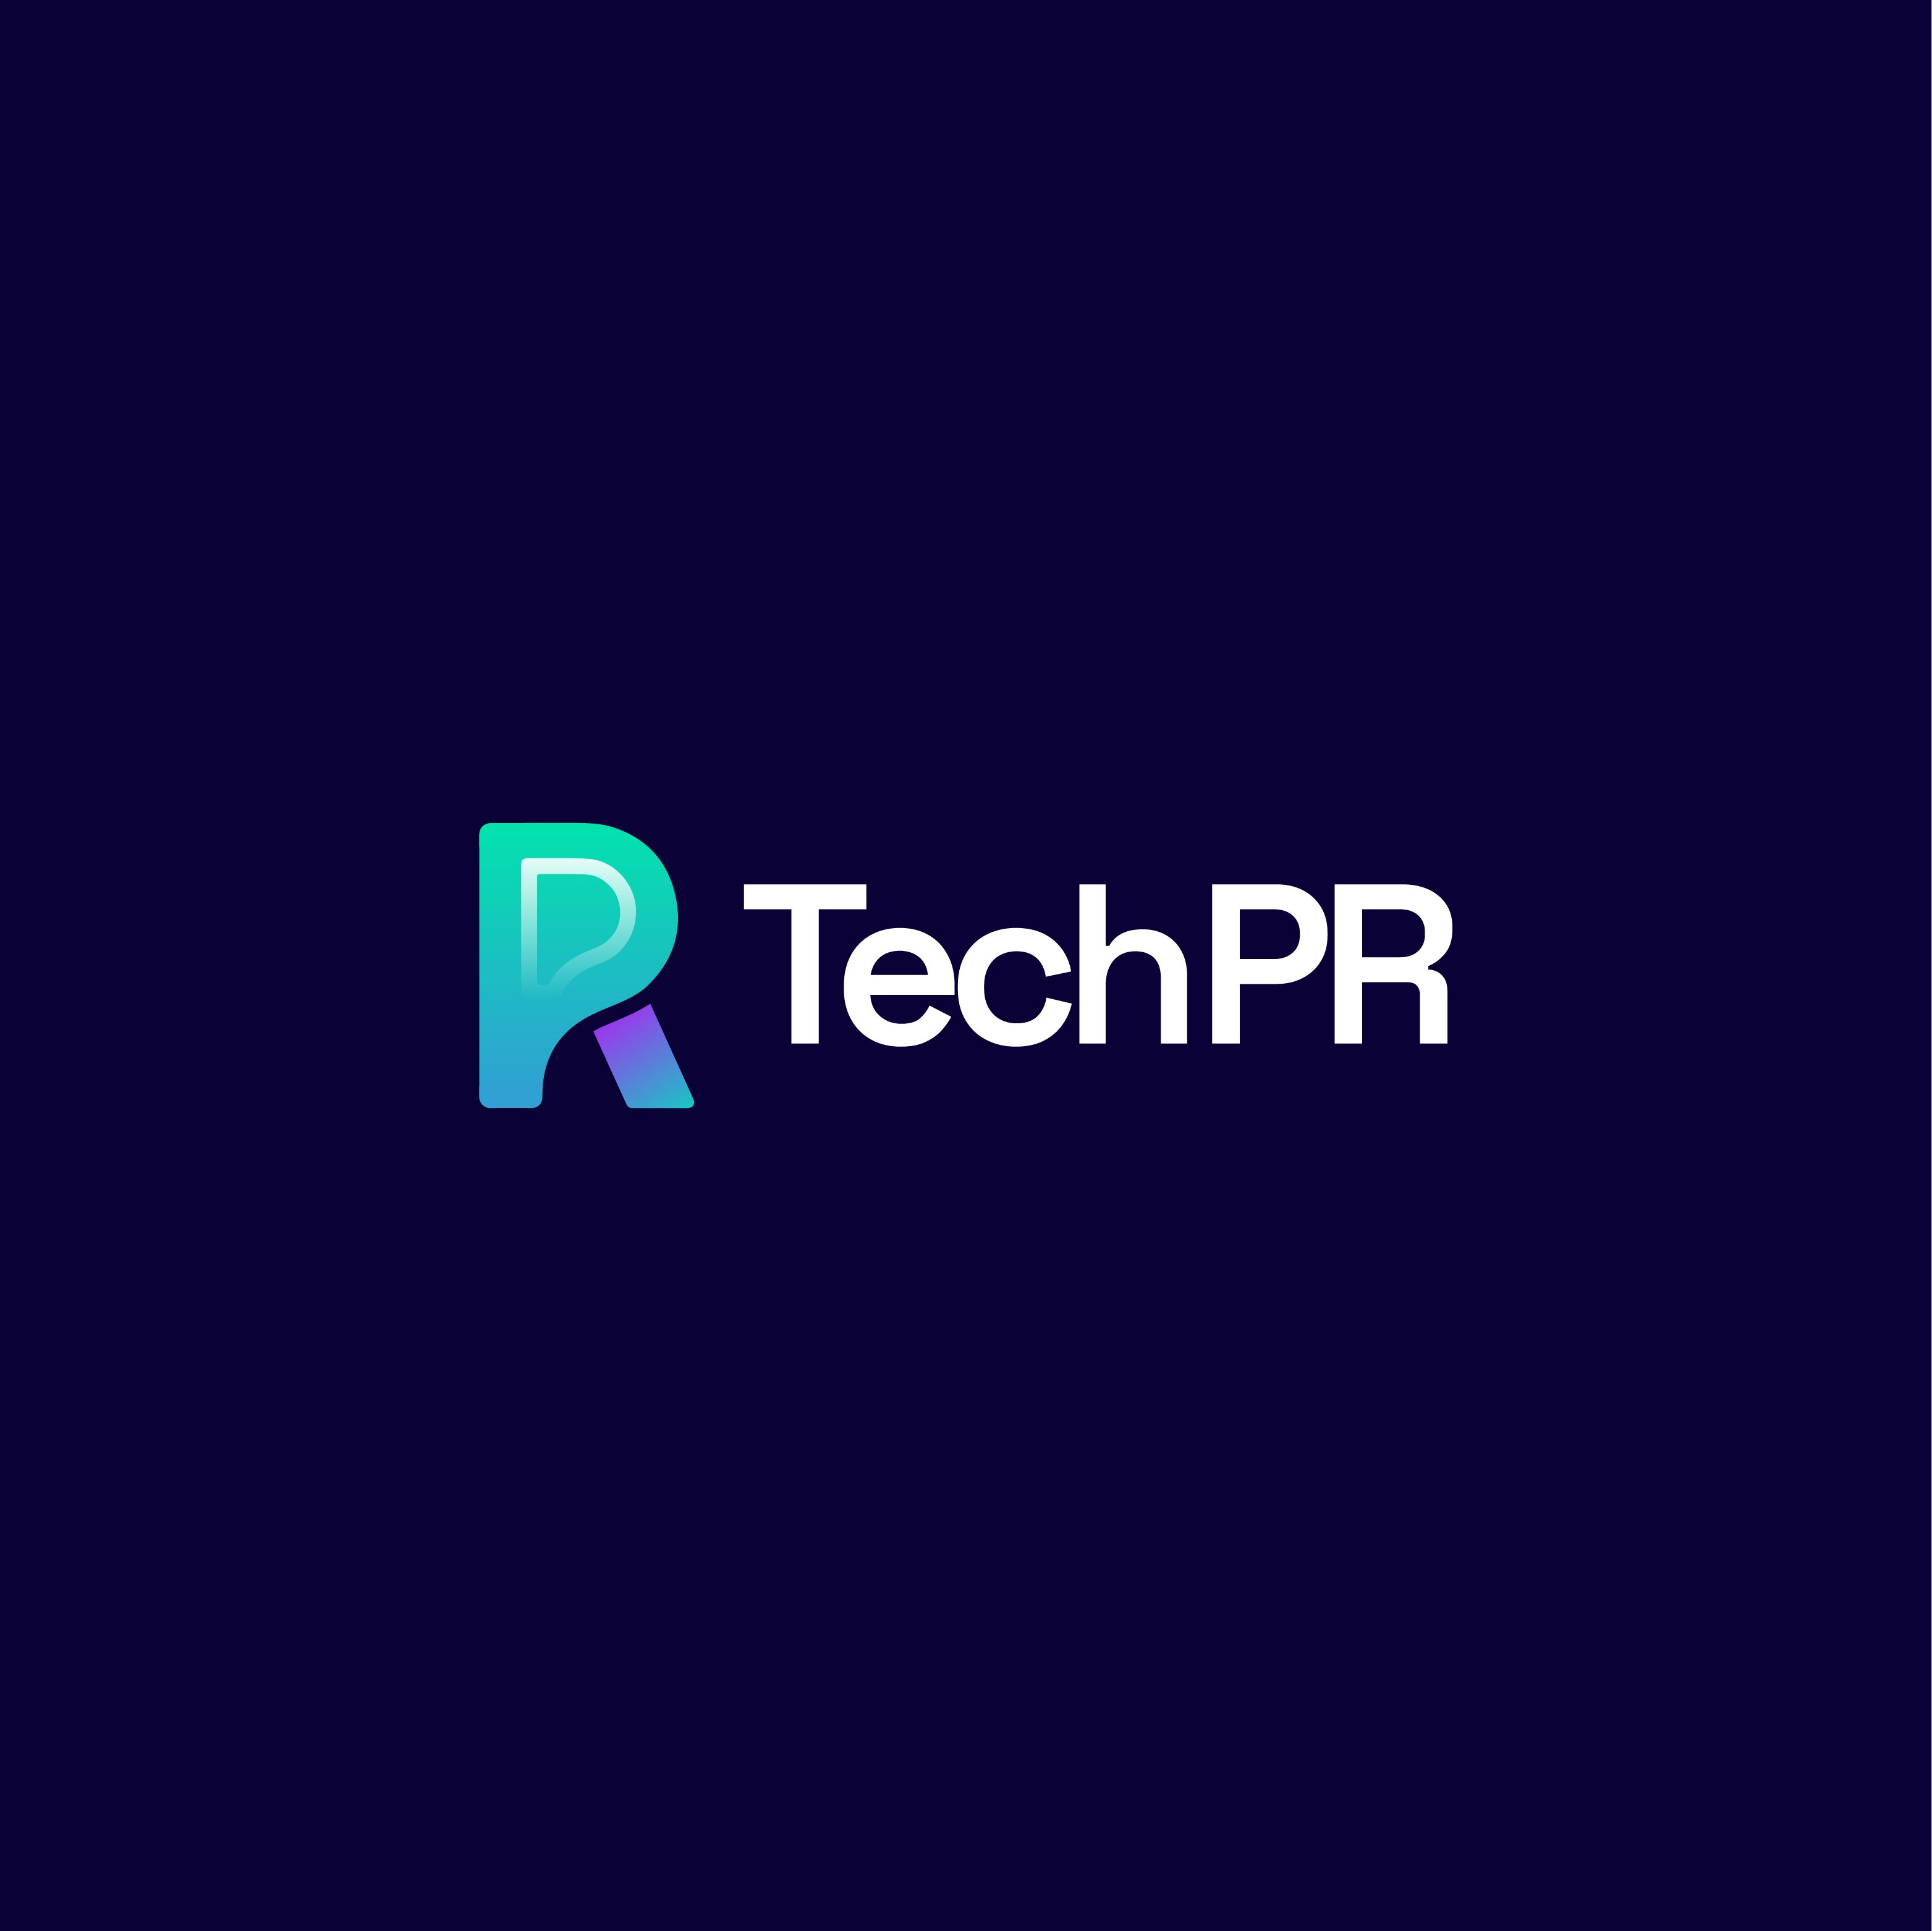 TechPR Nigeria announces pan-African expansion, appoints Felicia Omari Ochelle as CEO